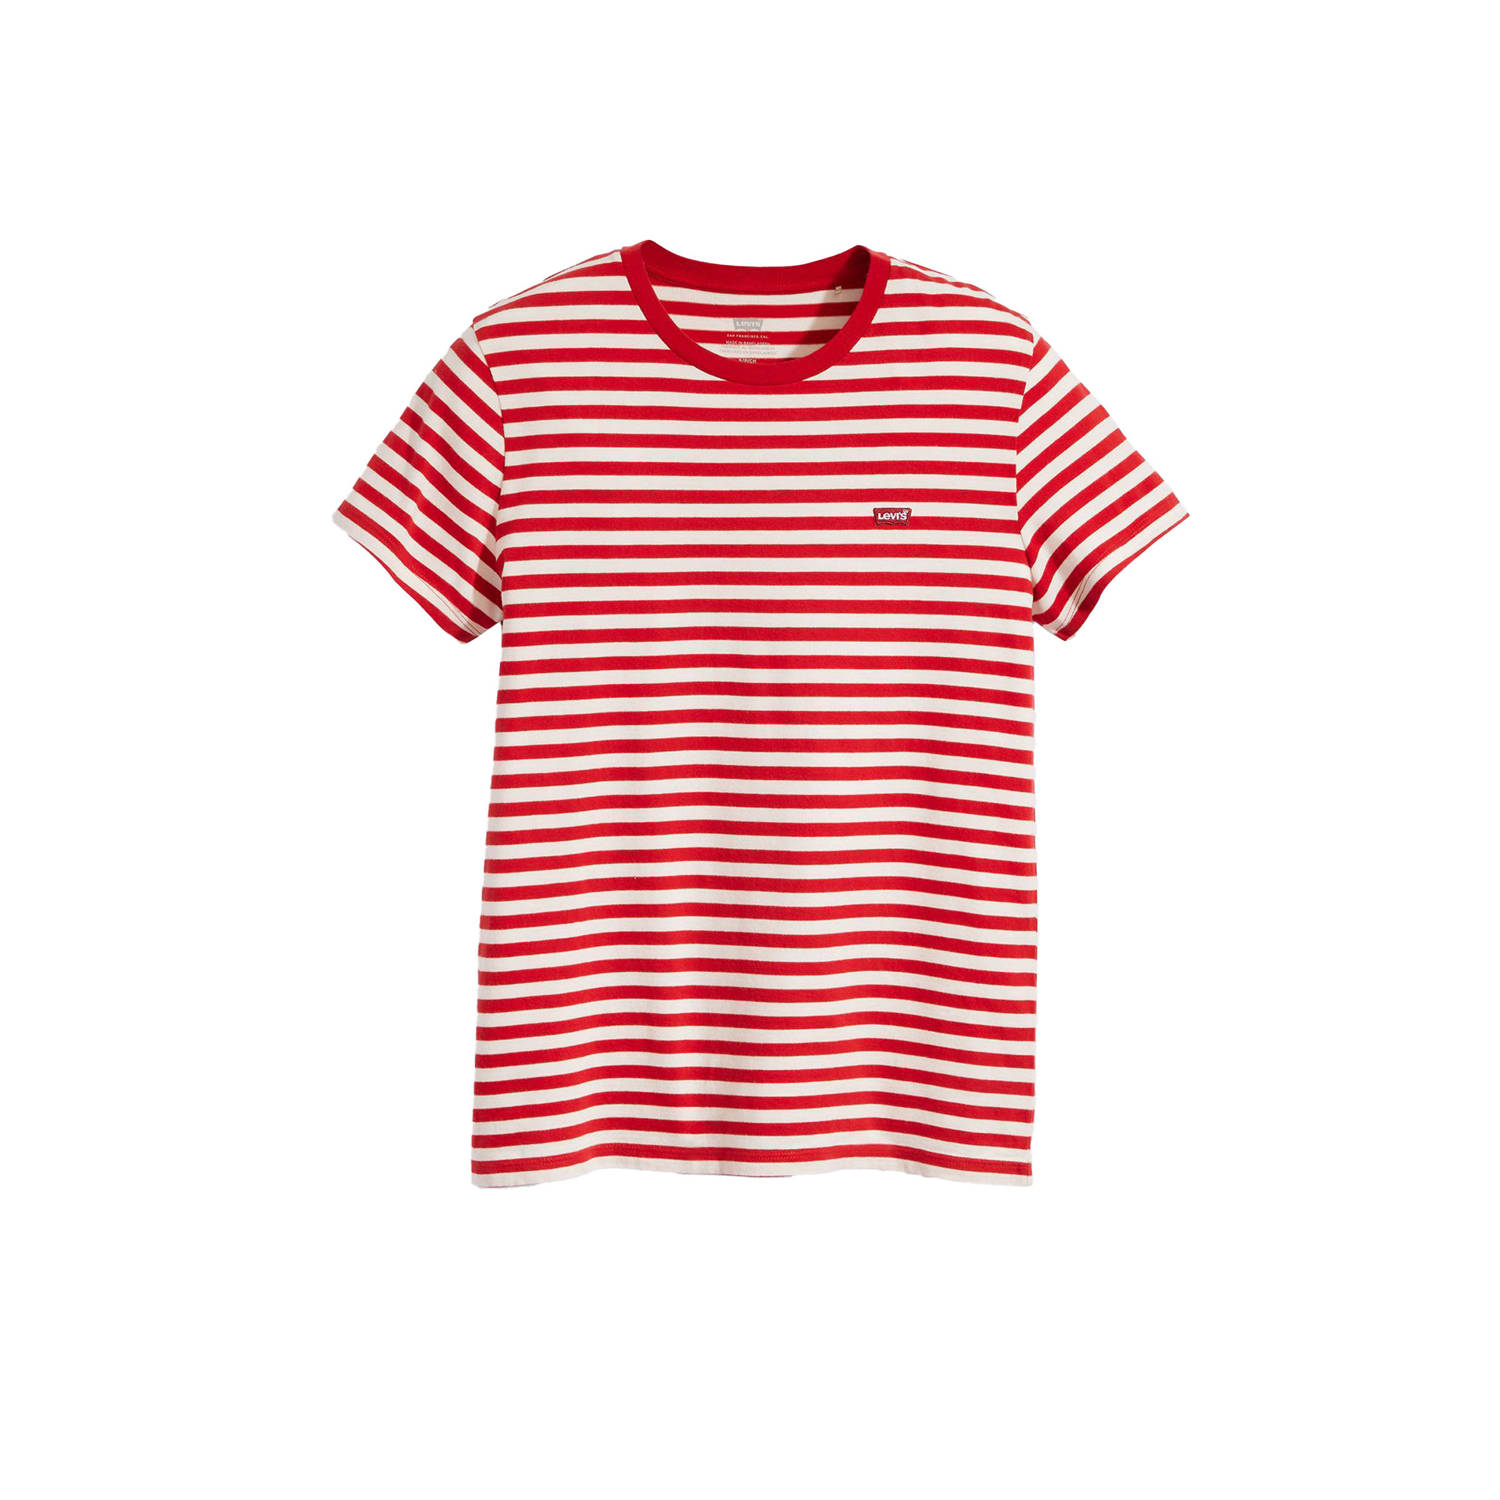 Levi's gestreept T-shirt rood wit